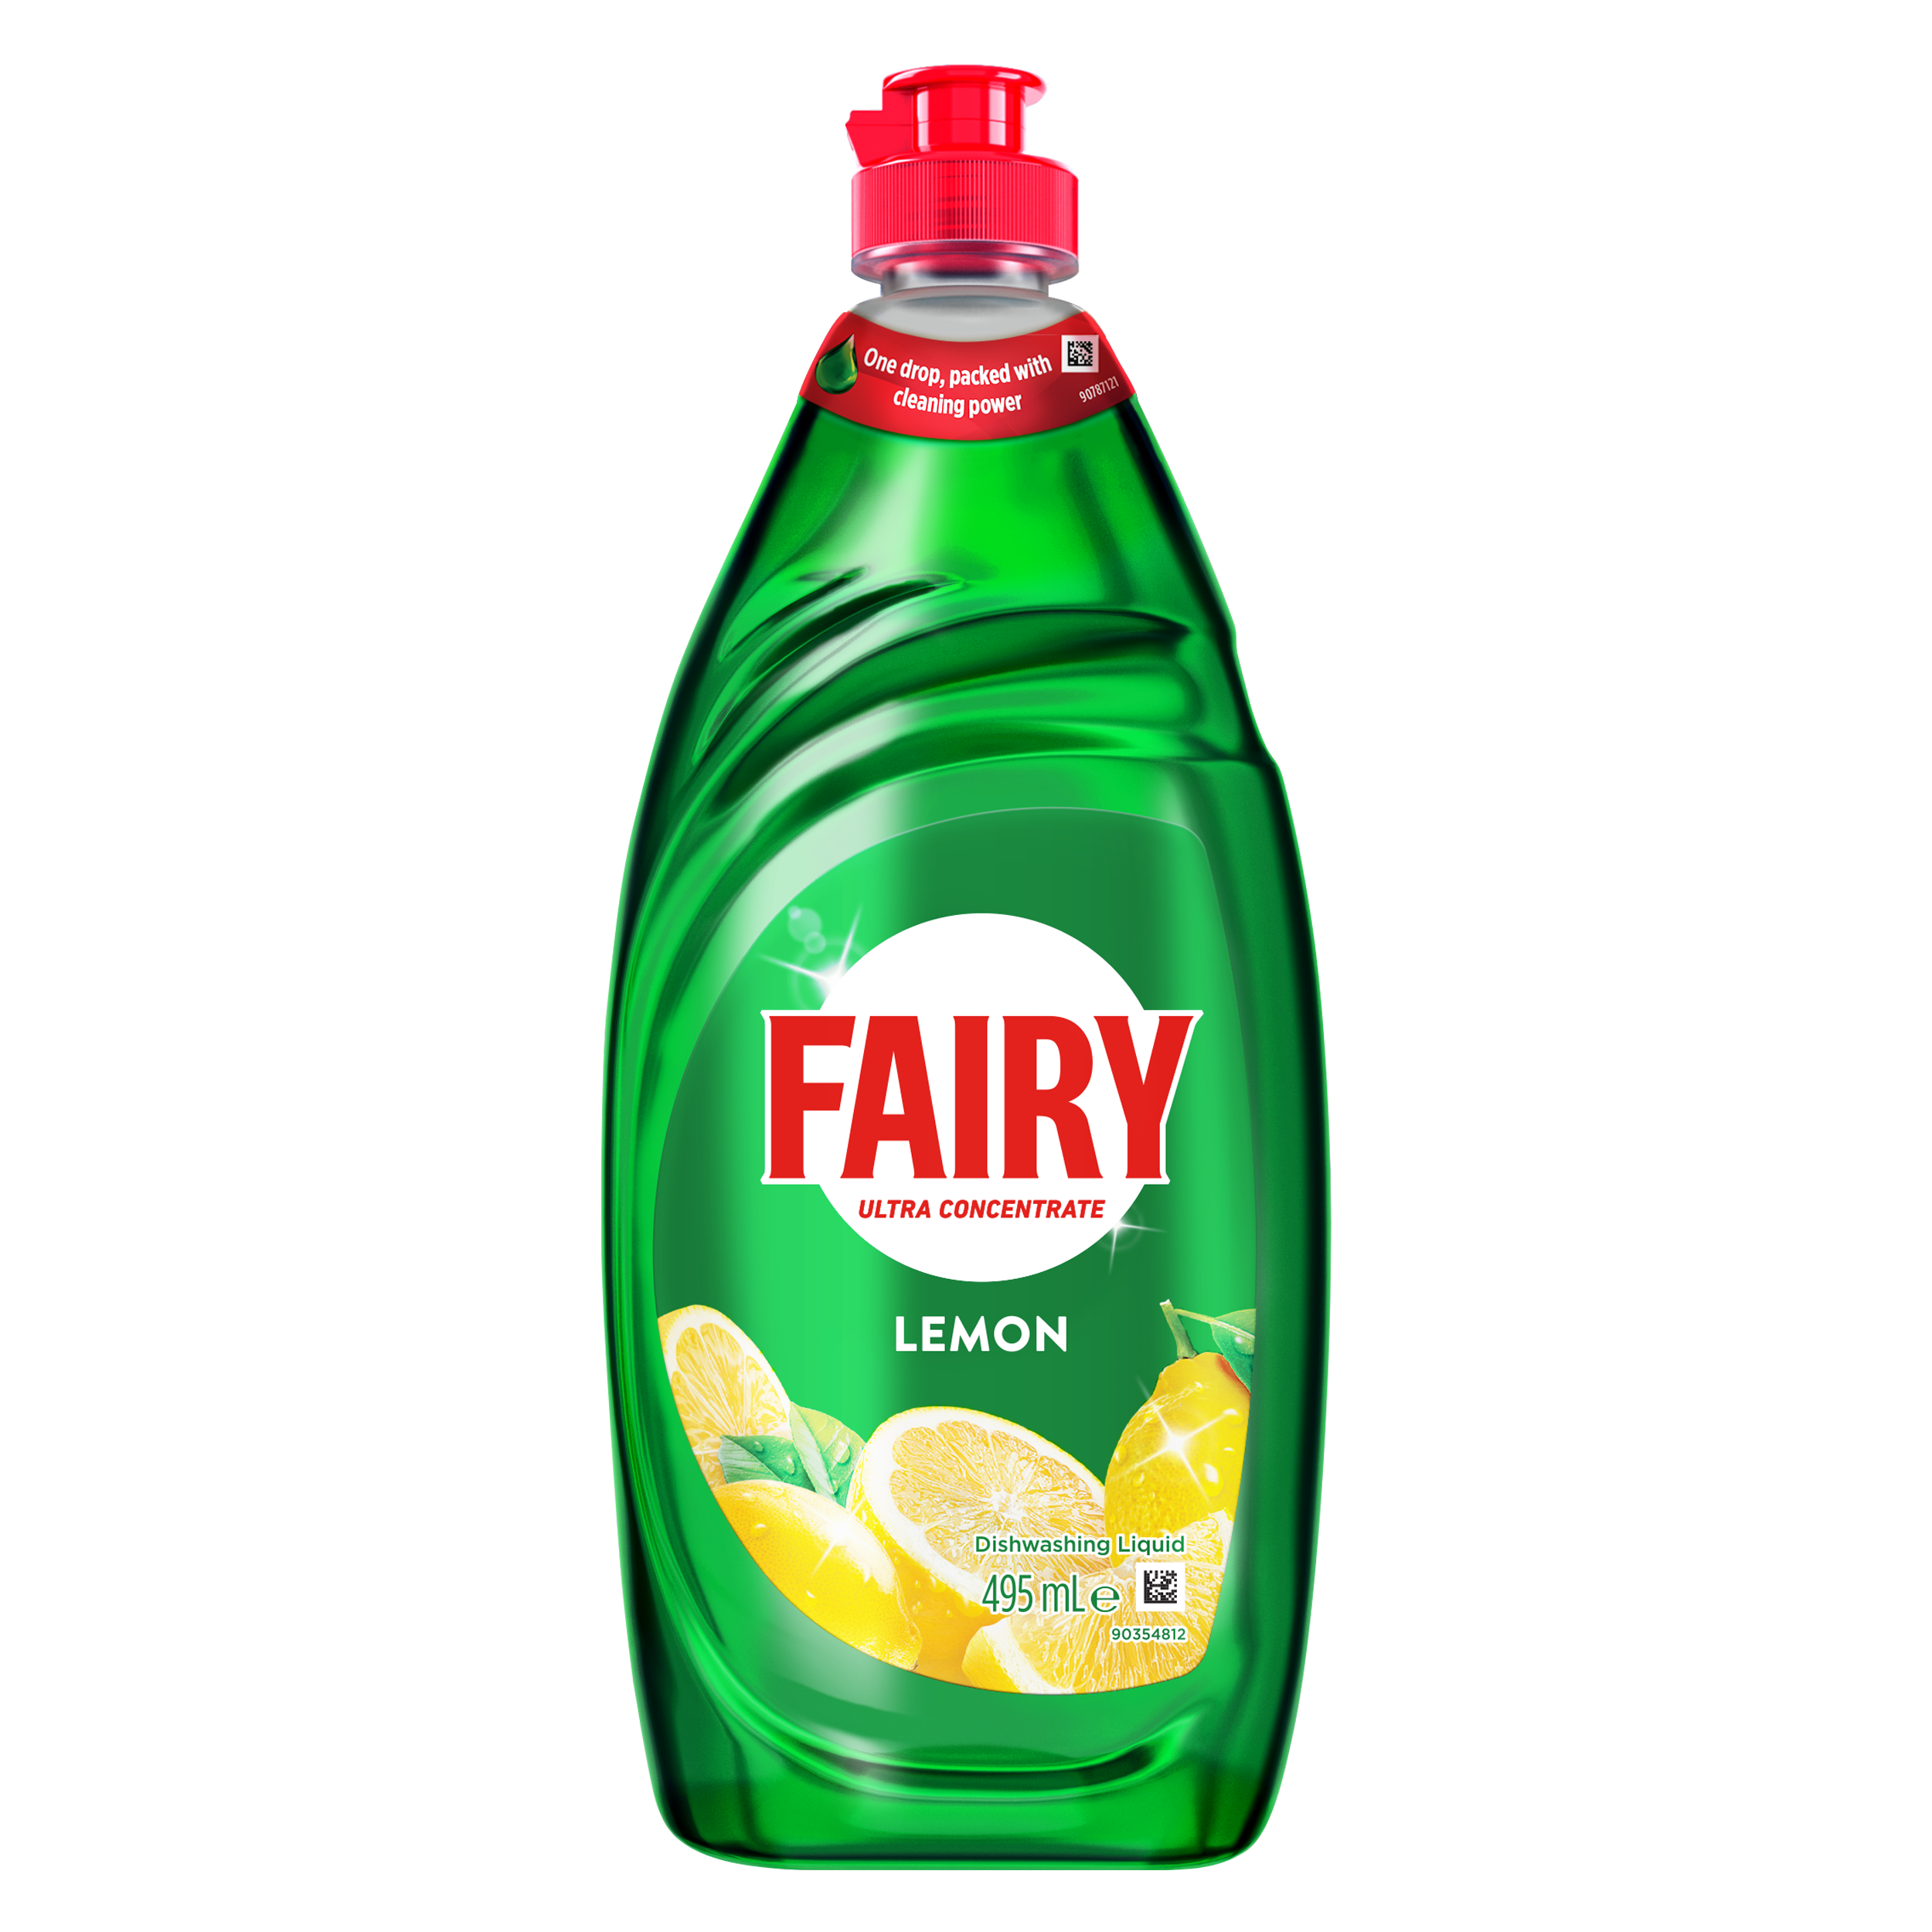 Fairy Ultra Concentrate Dishwashing Liquid Lemon (495ml)